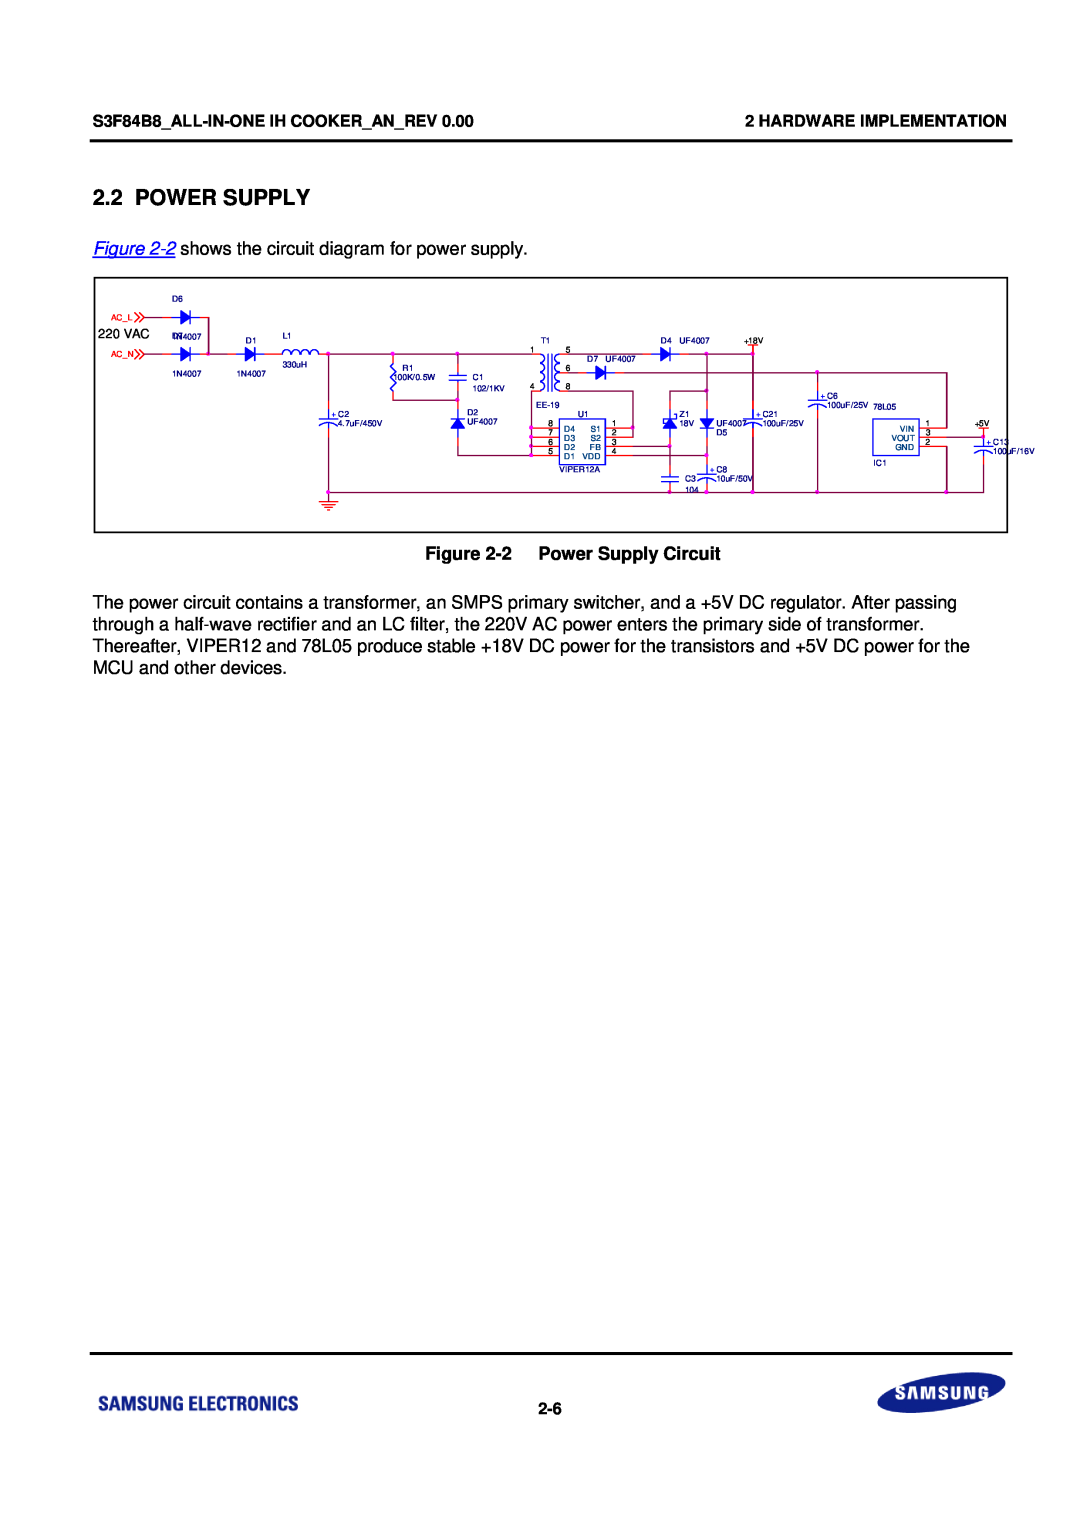 Samsung S3F84B8 manual 2 Power Supply Circuit 